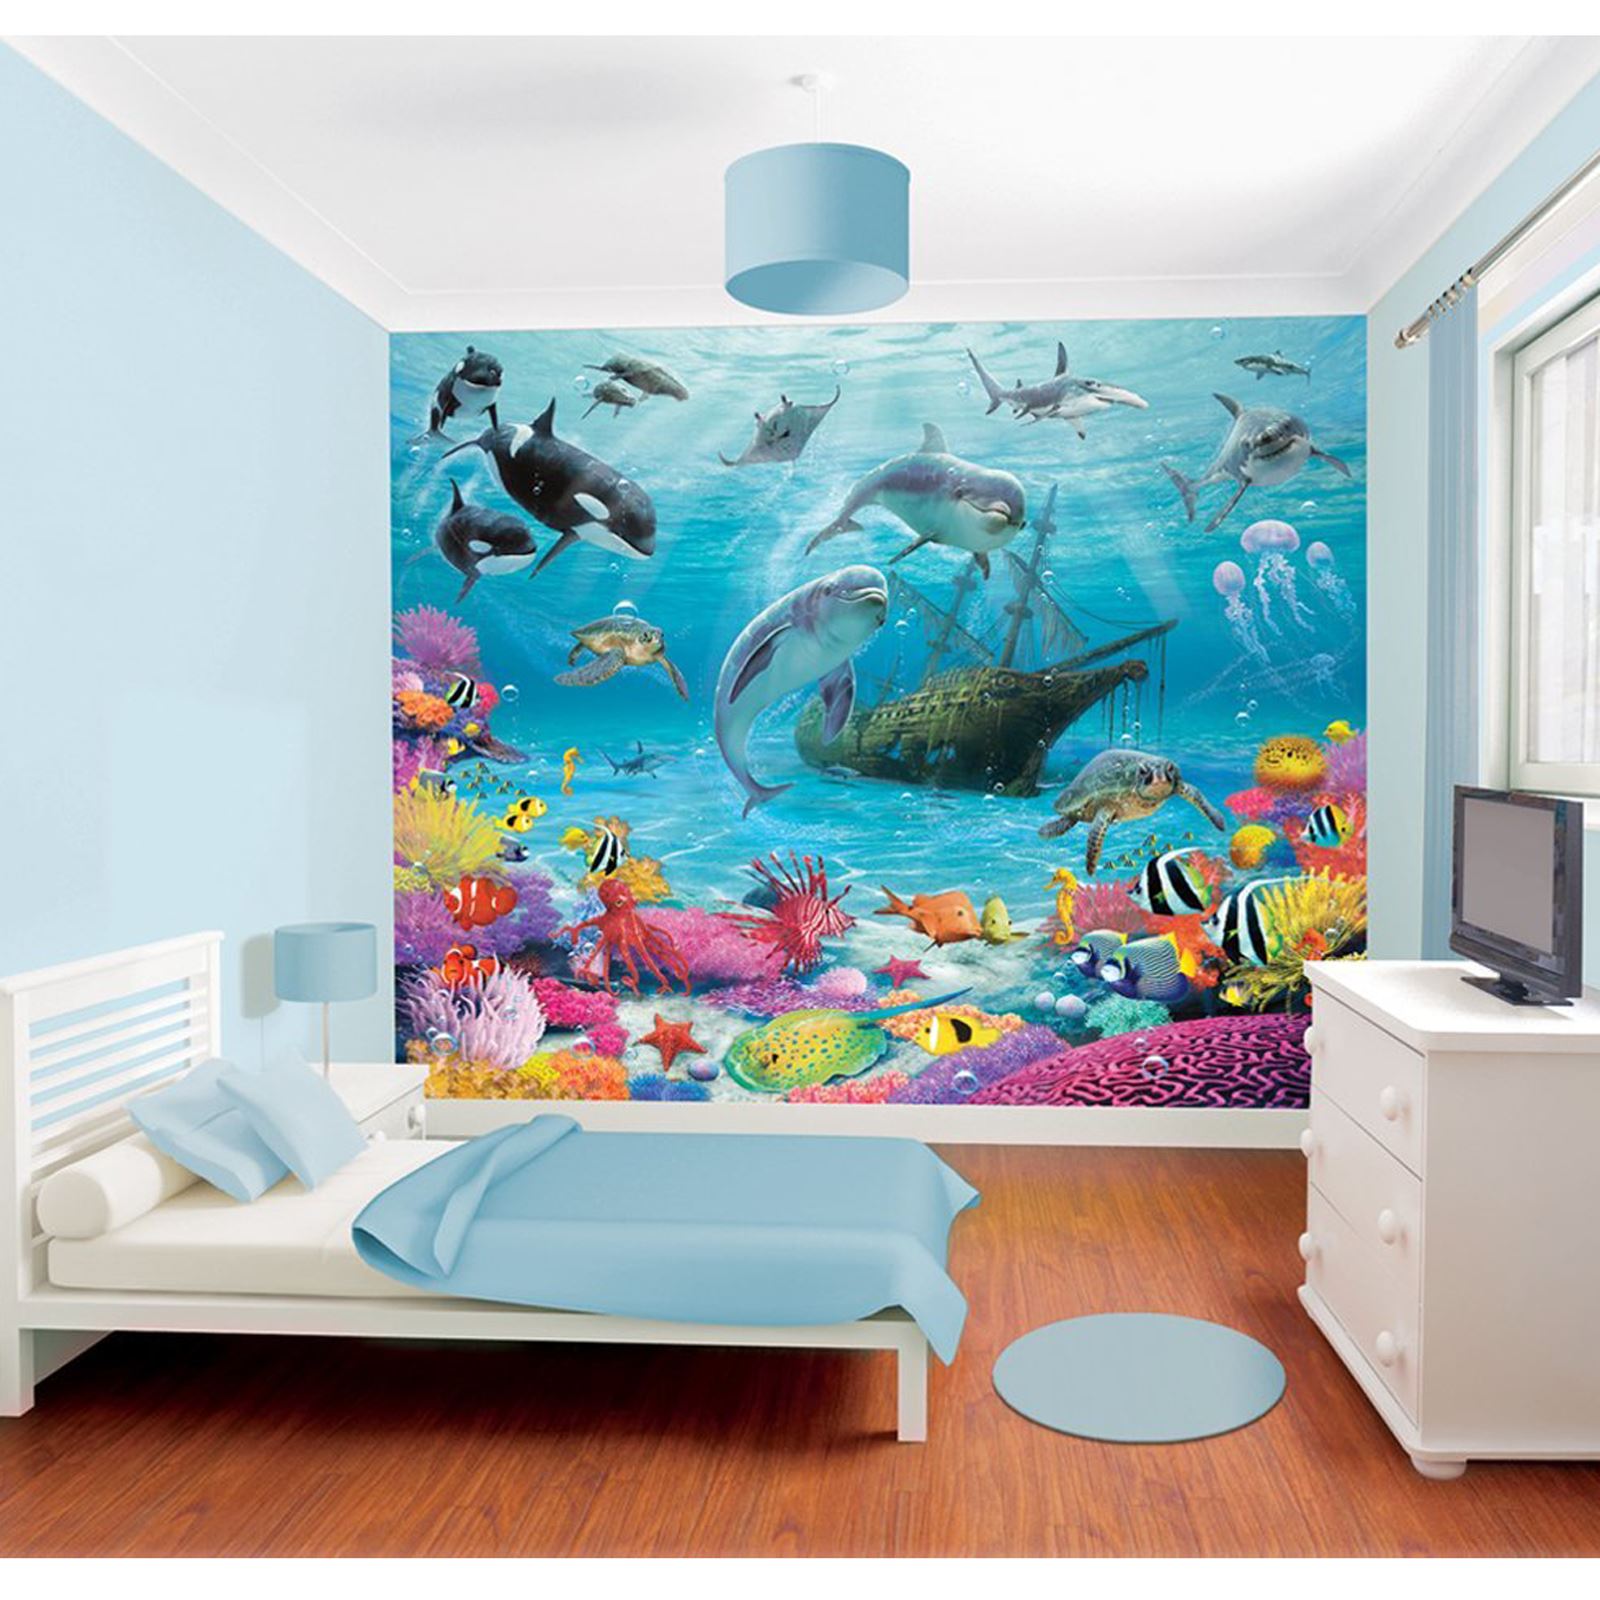 peppa pig bedroom wallpaper,aqua,turquoise,wall,room,mural